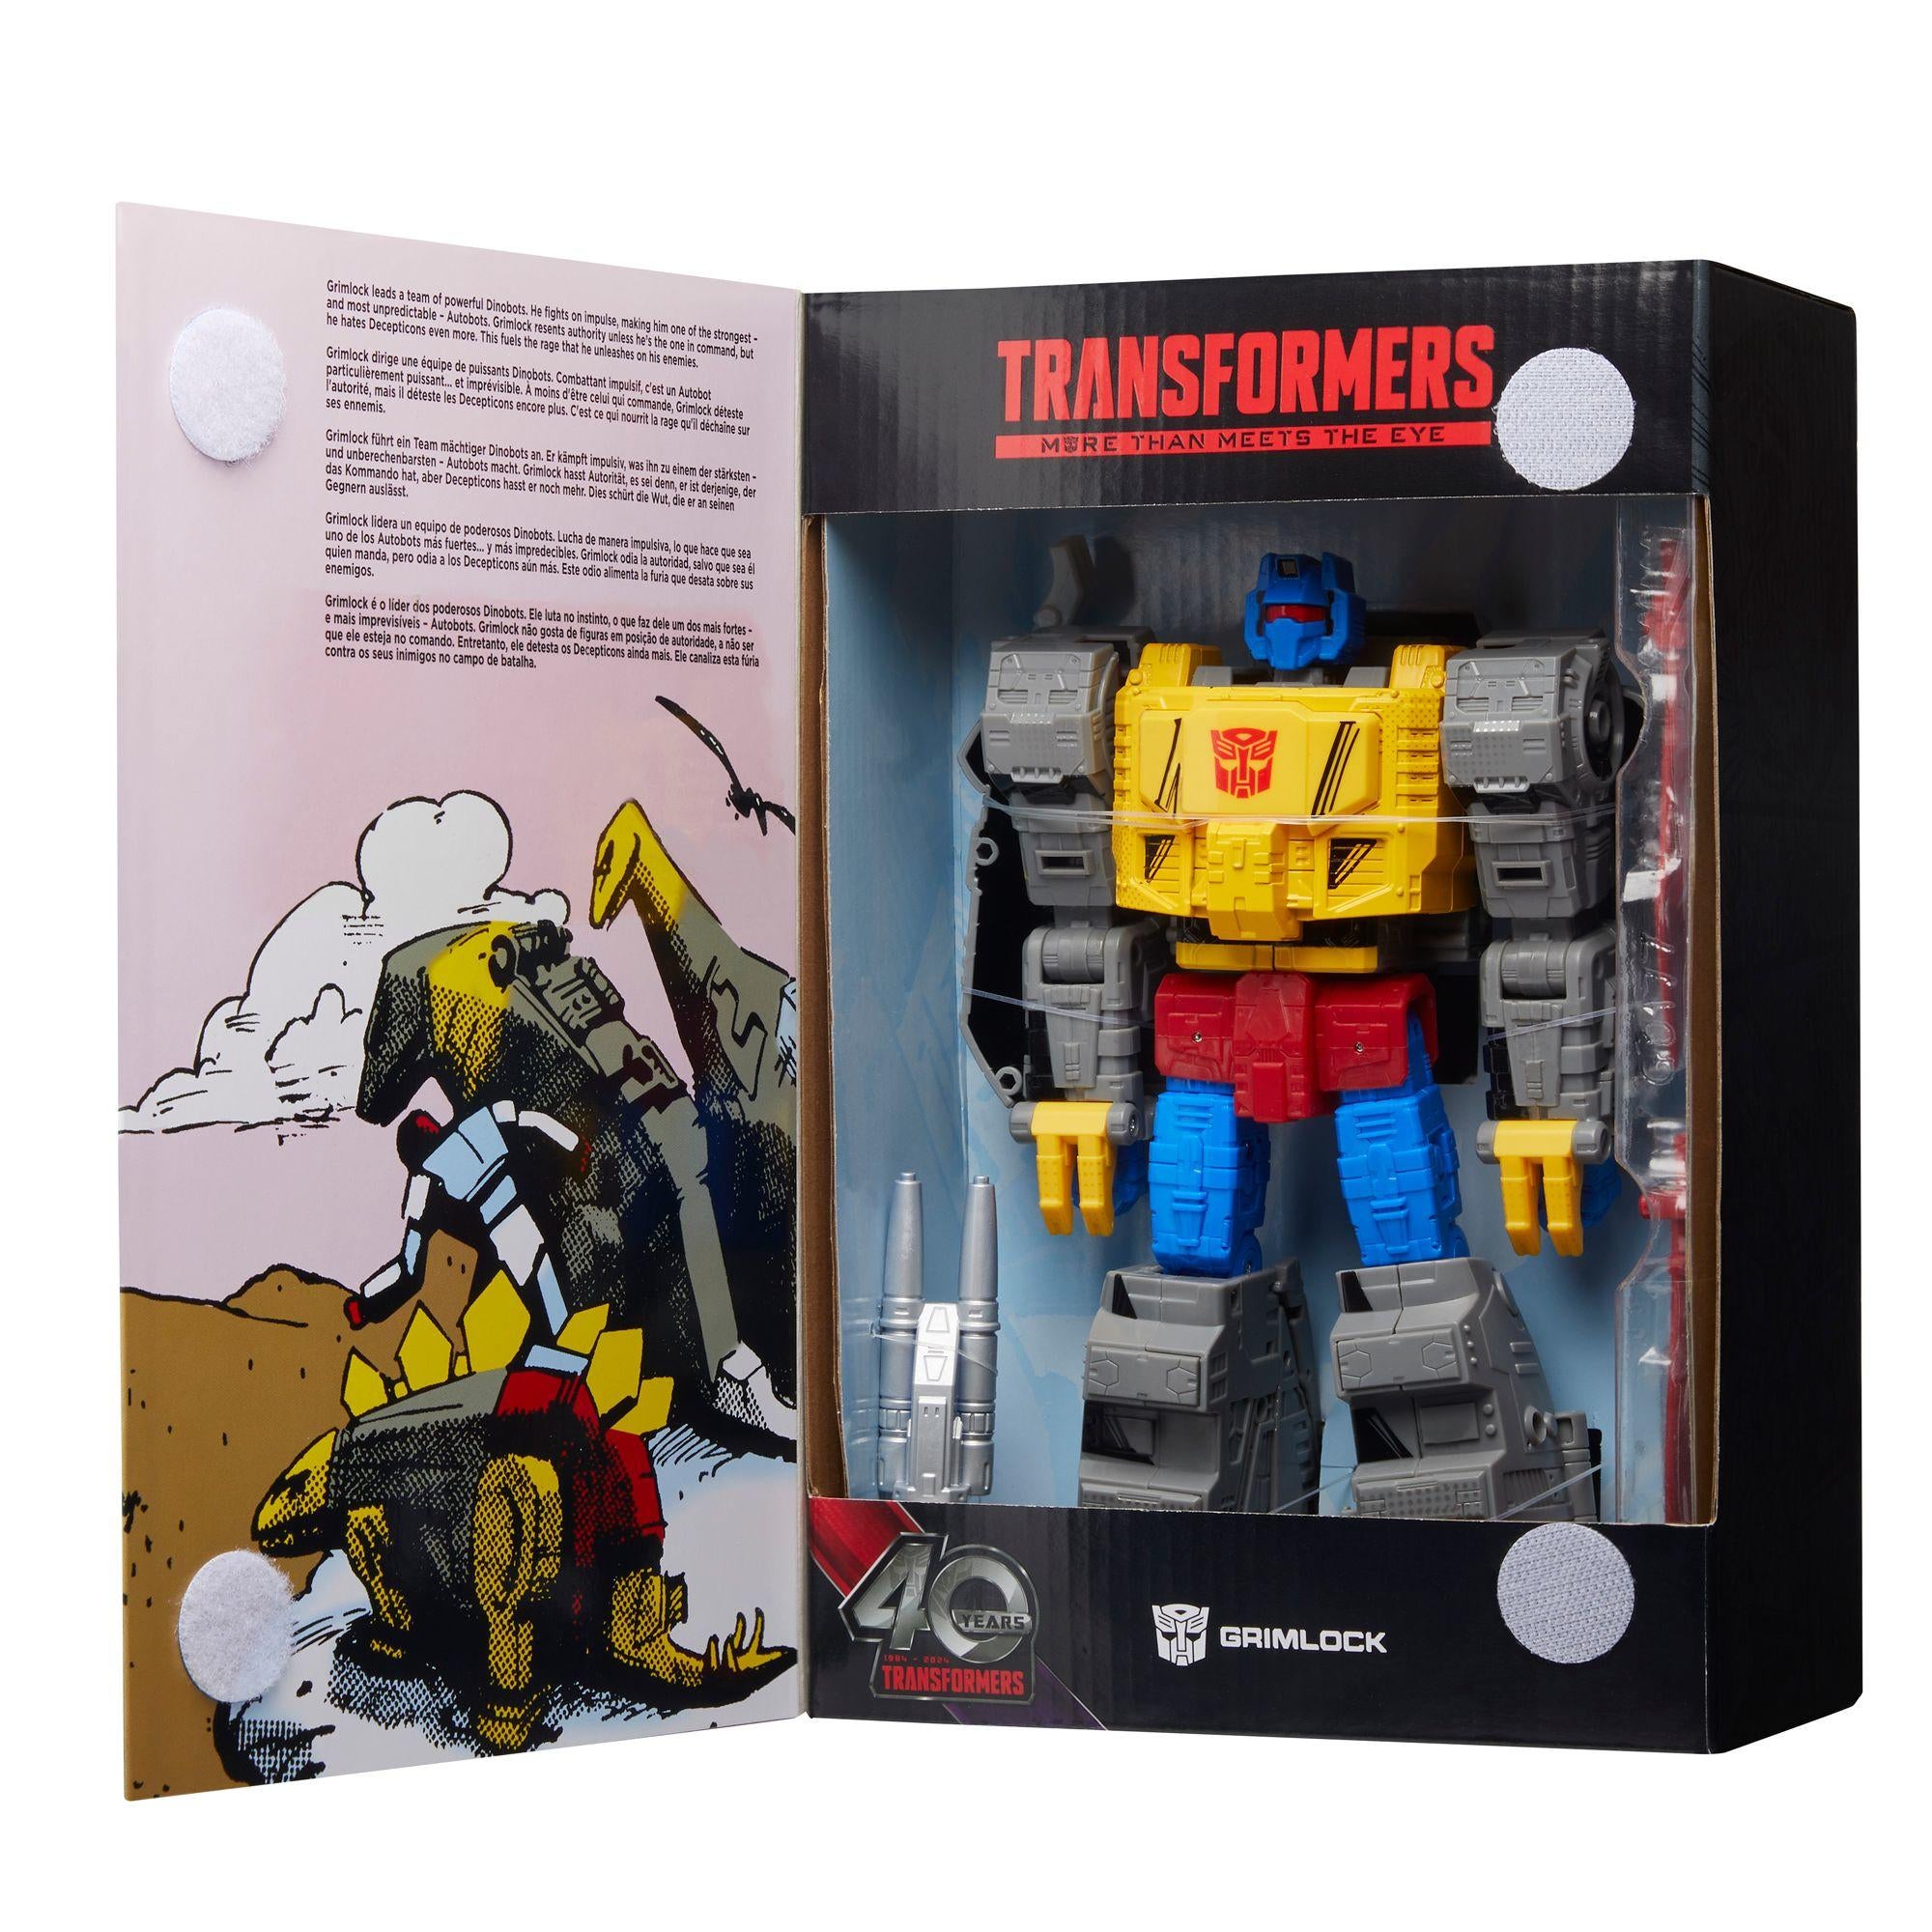 Transformers Generations Comic Book Shockwave and Grimlock Figures